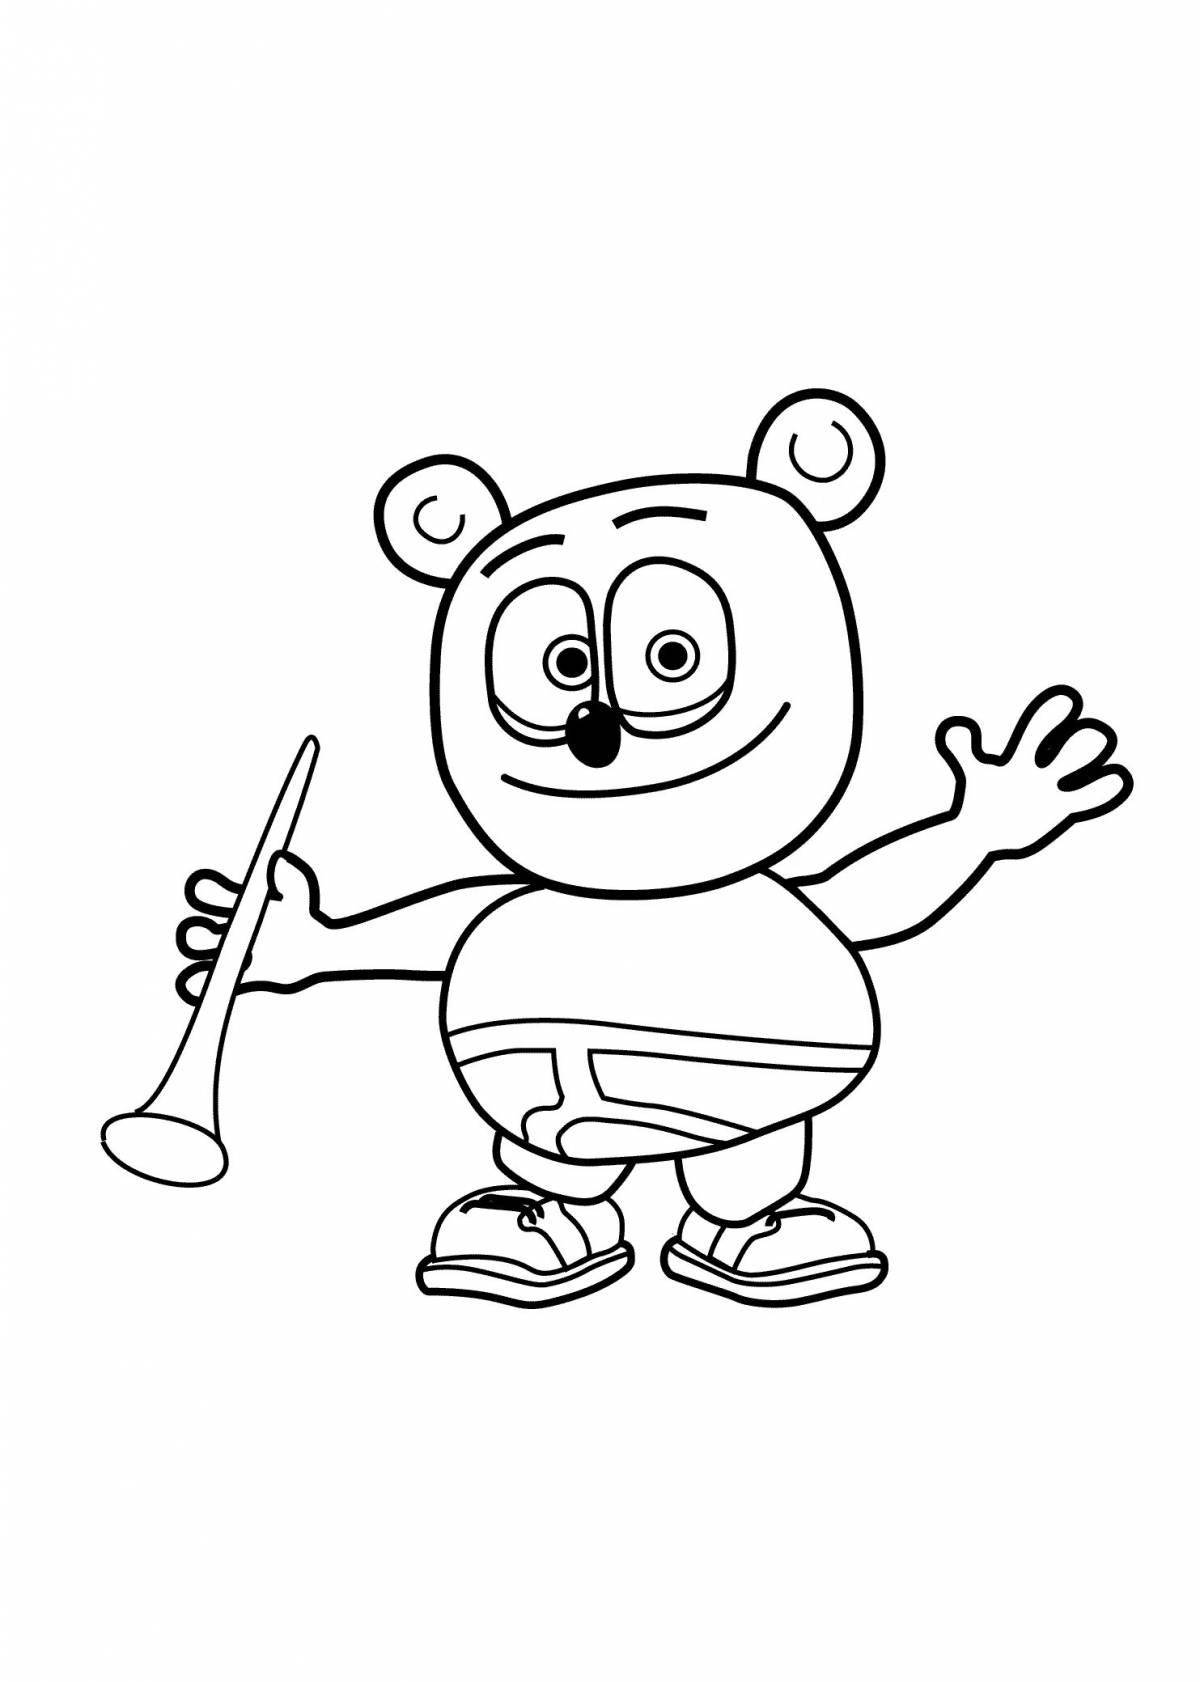 Fancy gummy bear coloring book